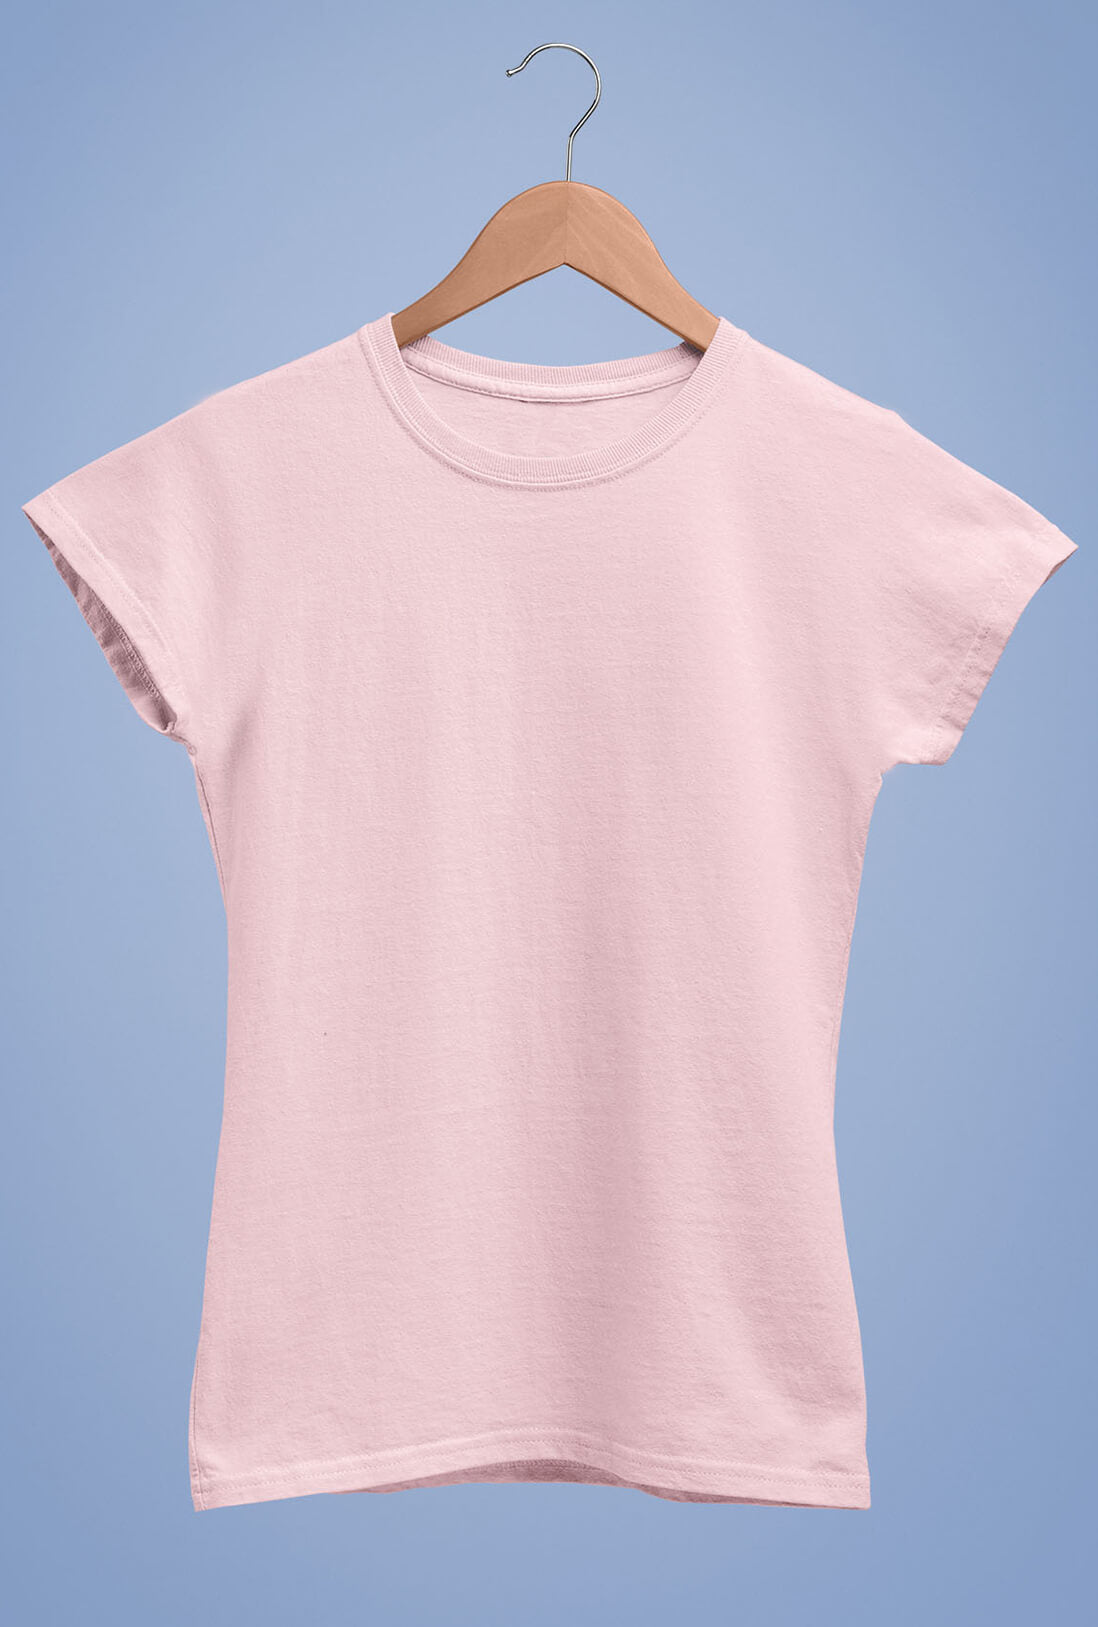 Women's Plain Pink Cotton T-Shirt